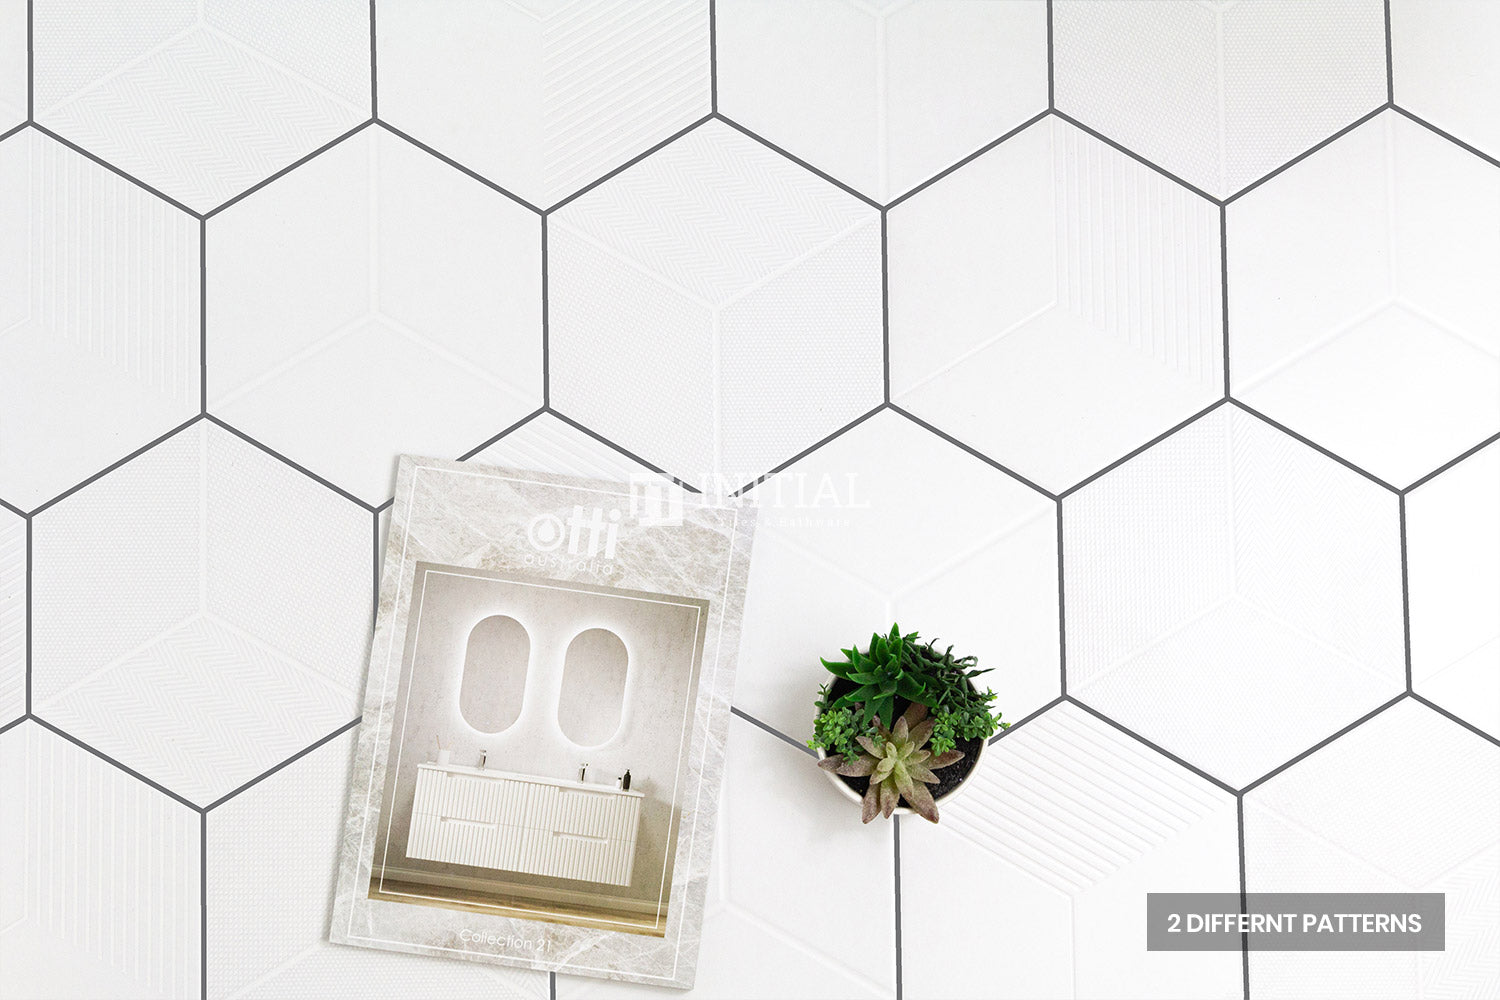 Modern look Tile Freestyle Hexagon Modern White Matt 200X230 ,